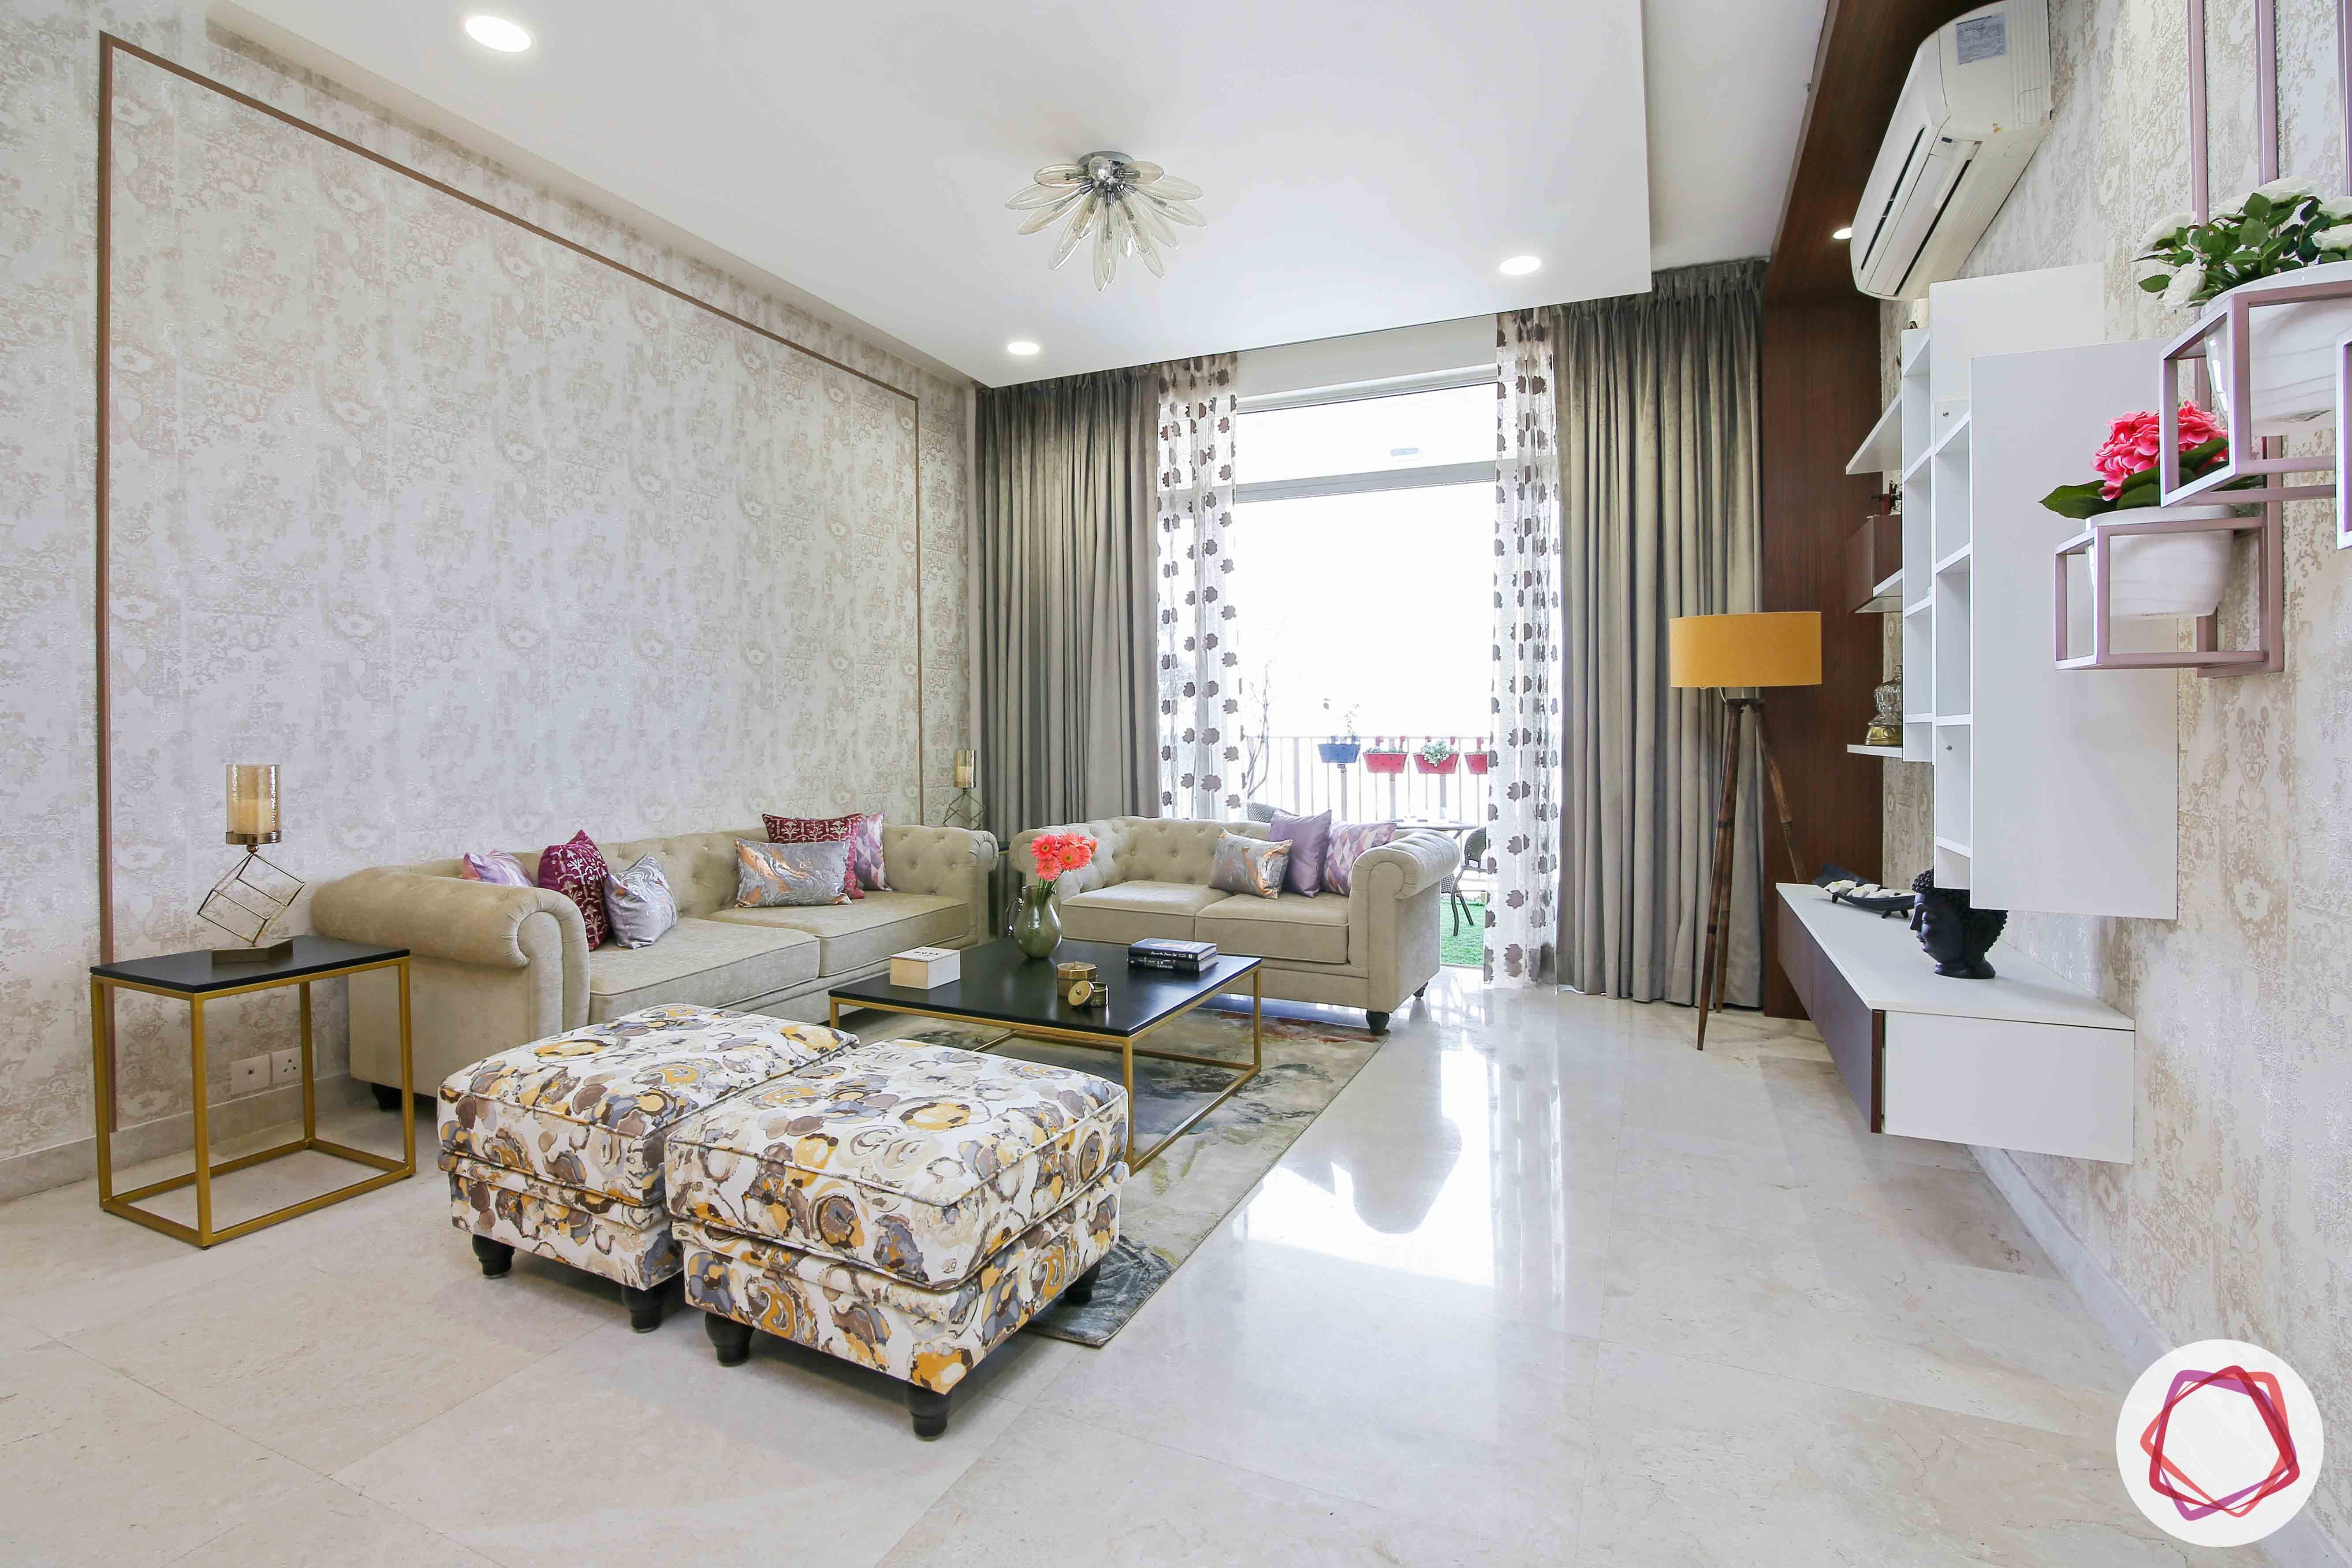 ireo victory valley-living room-ottomans-cassandra sofa-beige wallpaper